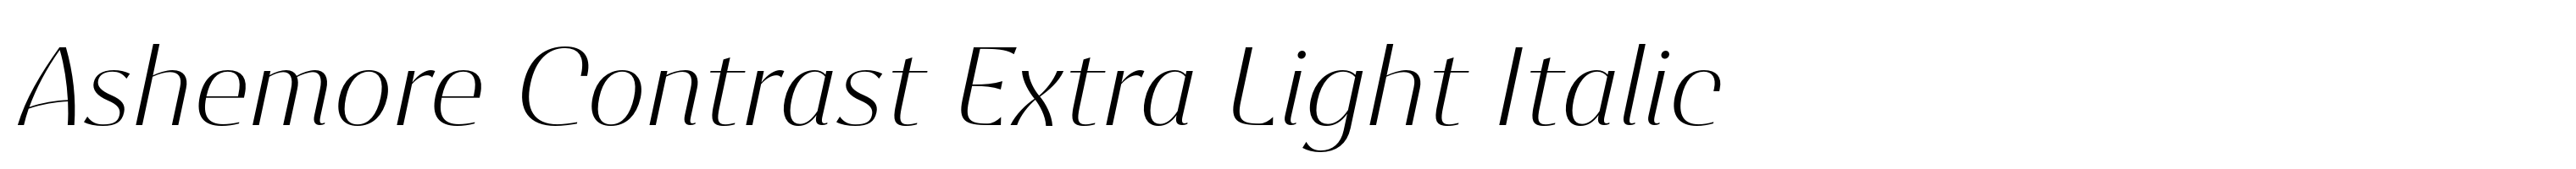 Ashemore Contrast Extra Light Italic